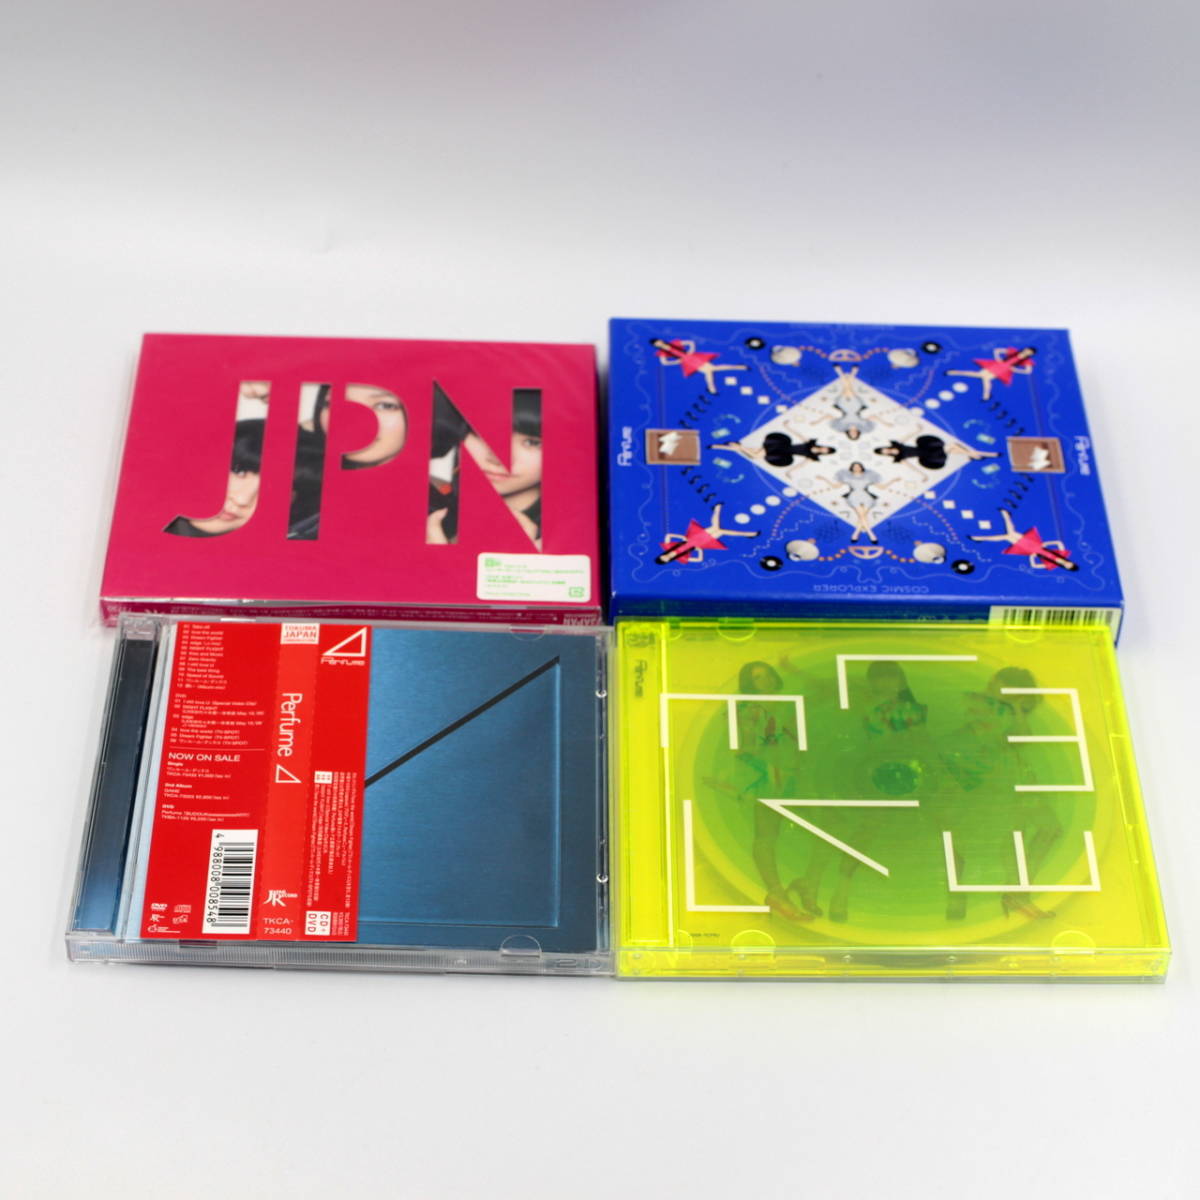 Perfume CD 18枚セット 初回盤 DVDつきCD 邦楽 CD 本・音楽・ゲーム 素敵でユニークな